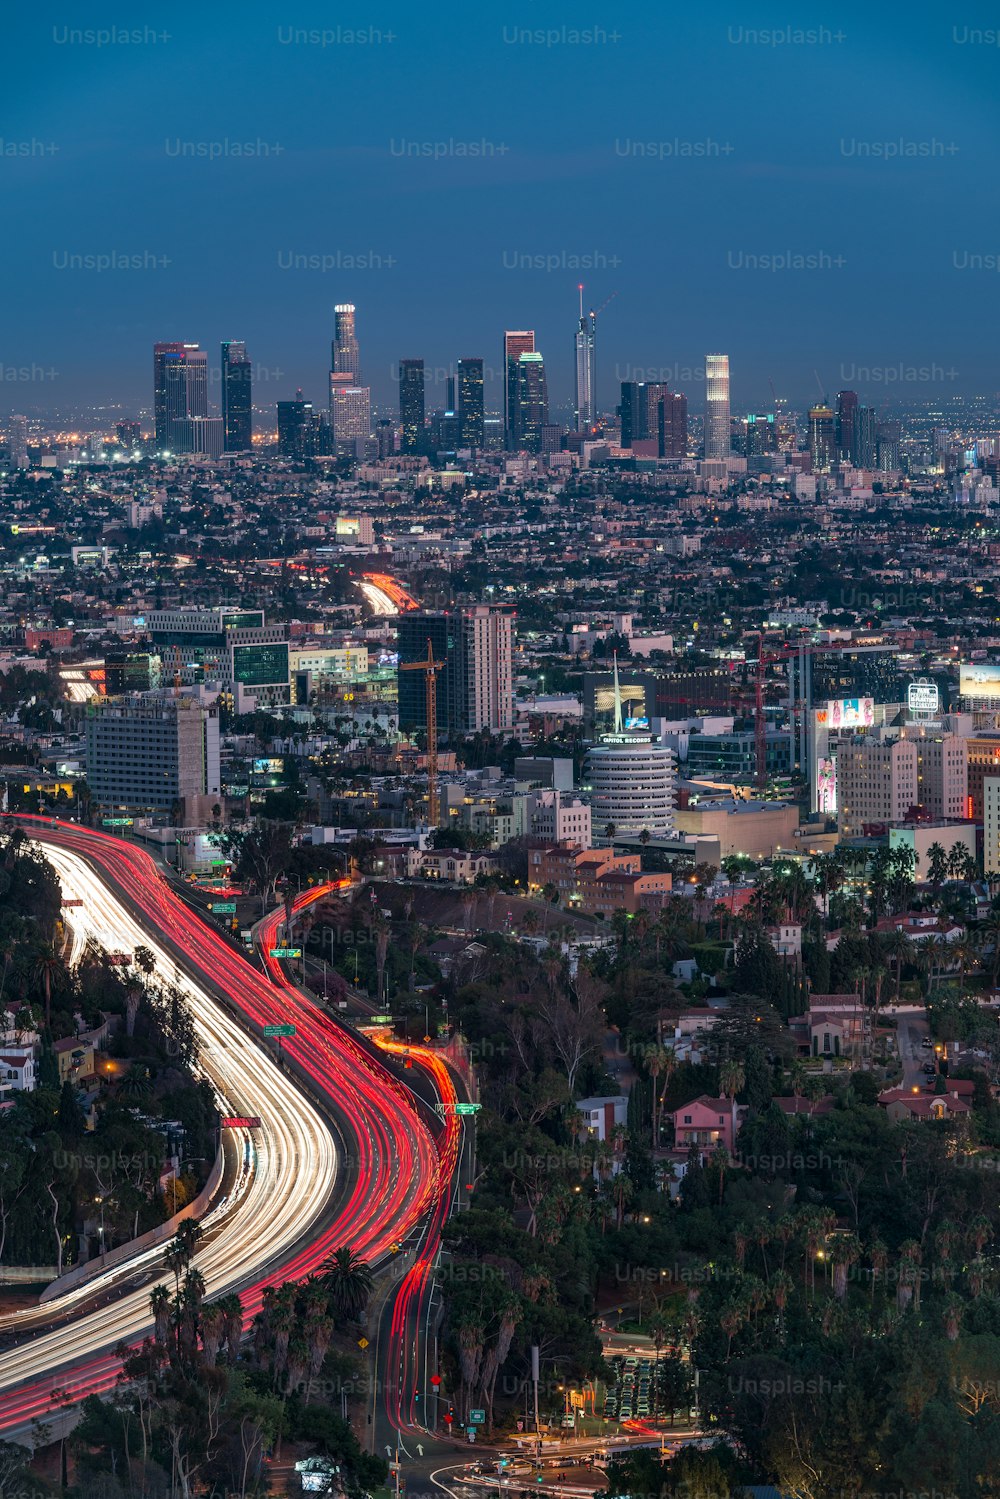 A vertical high angle shot of the illuminated Los Angeles, CA at night